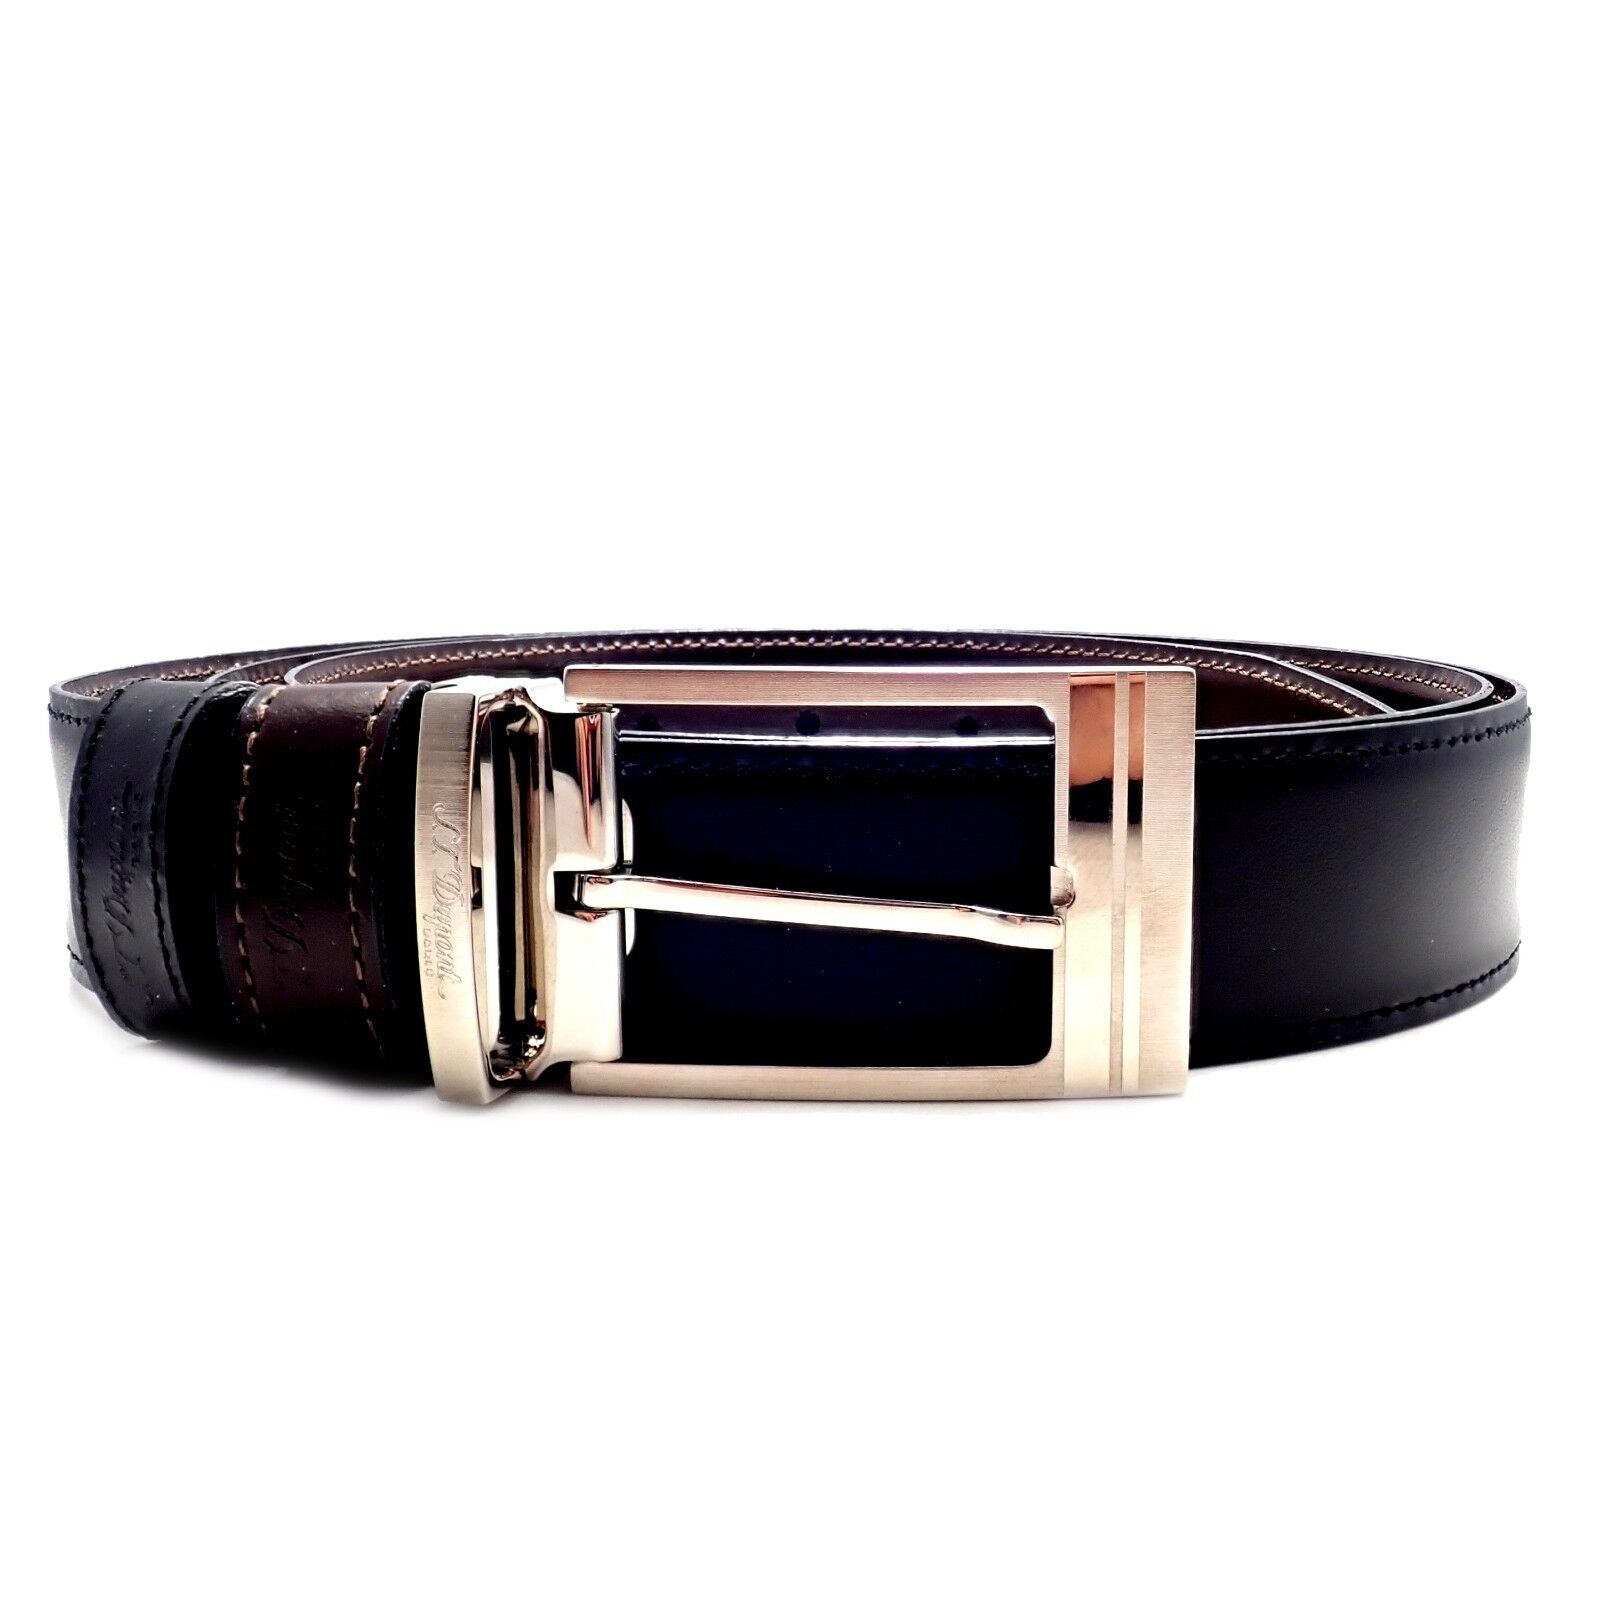 Diamond Leather Belts – Metal Belt Buckles, Accessories & Home